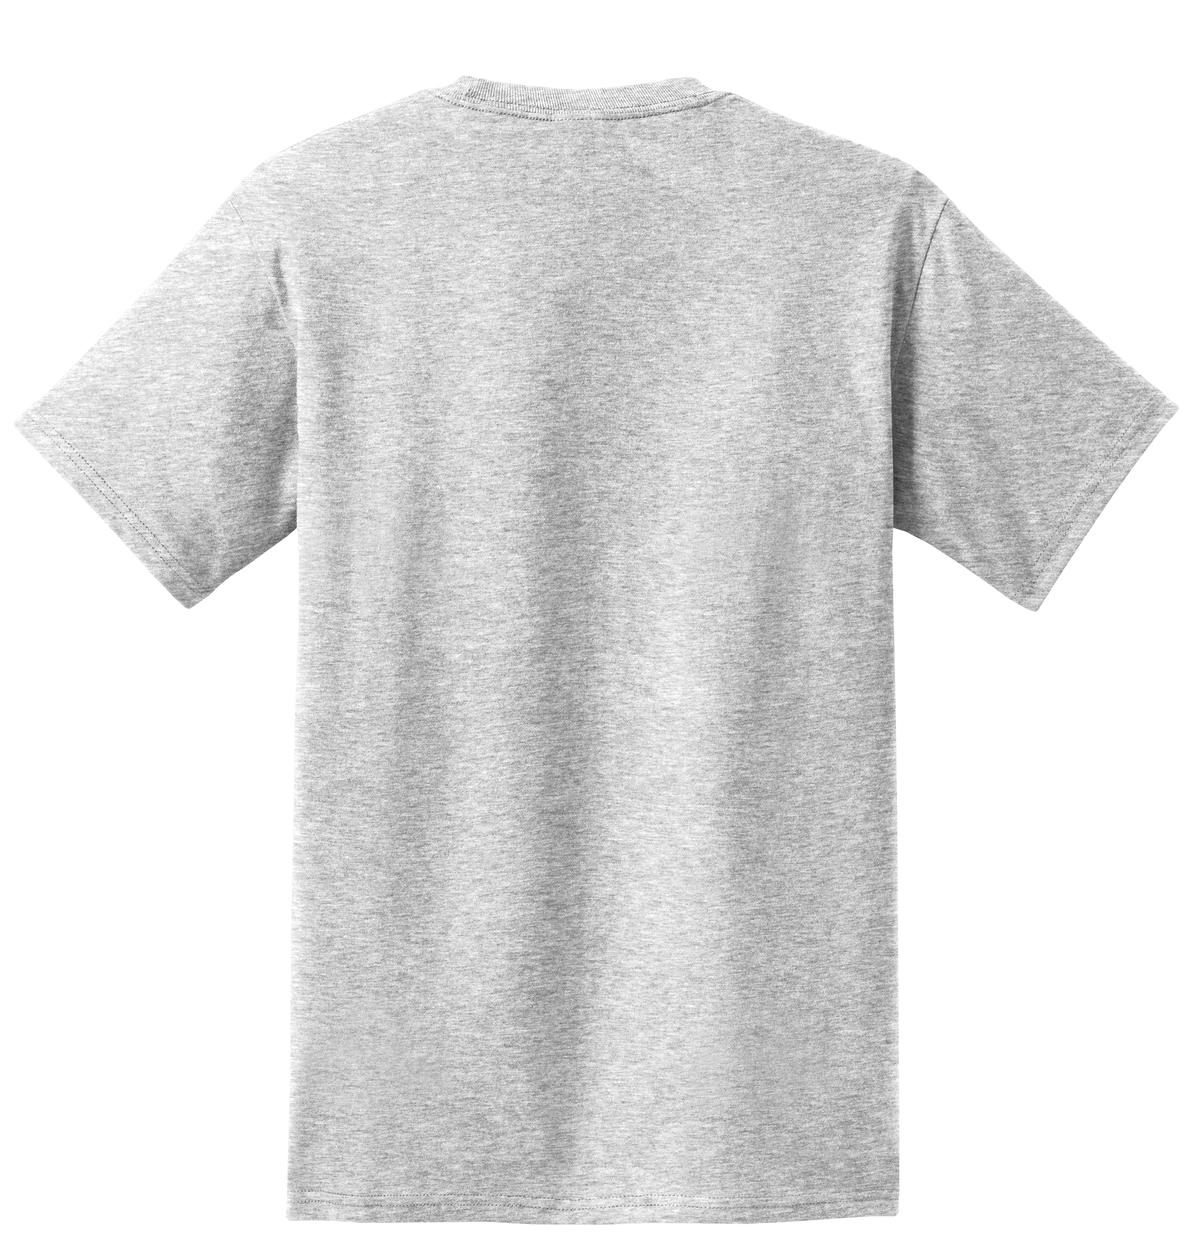 Men's Essential T Shirt with Pocket Ash